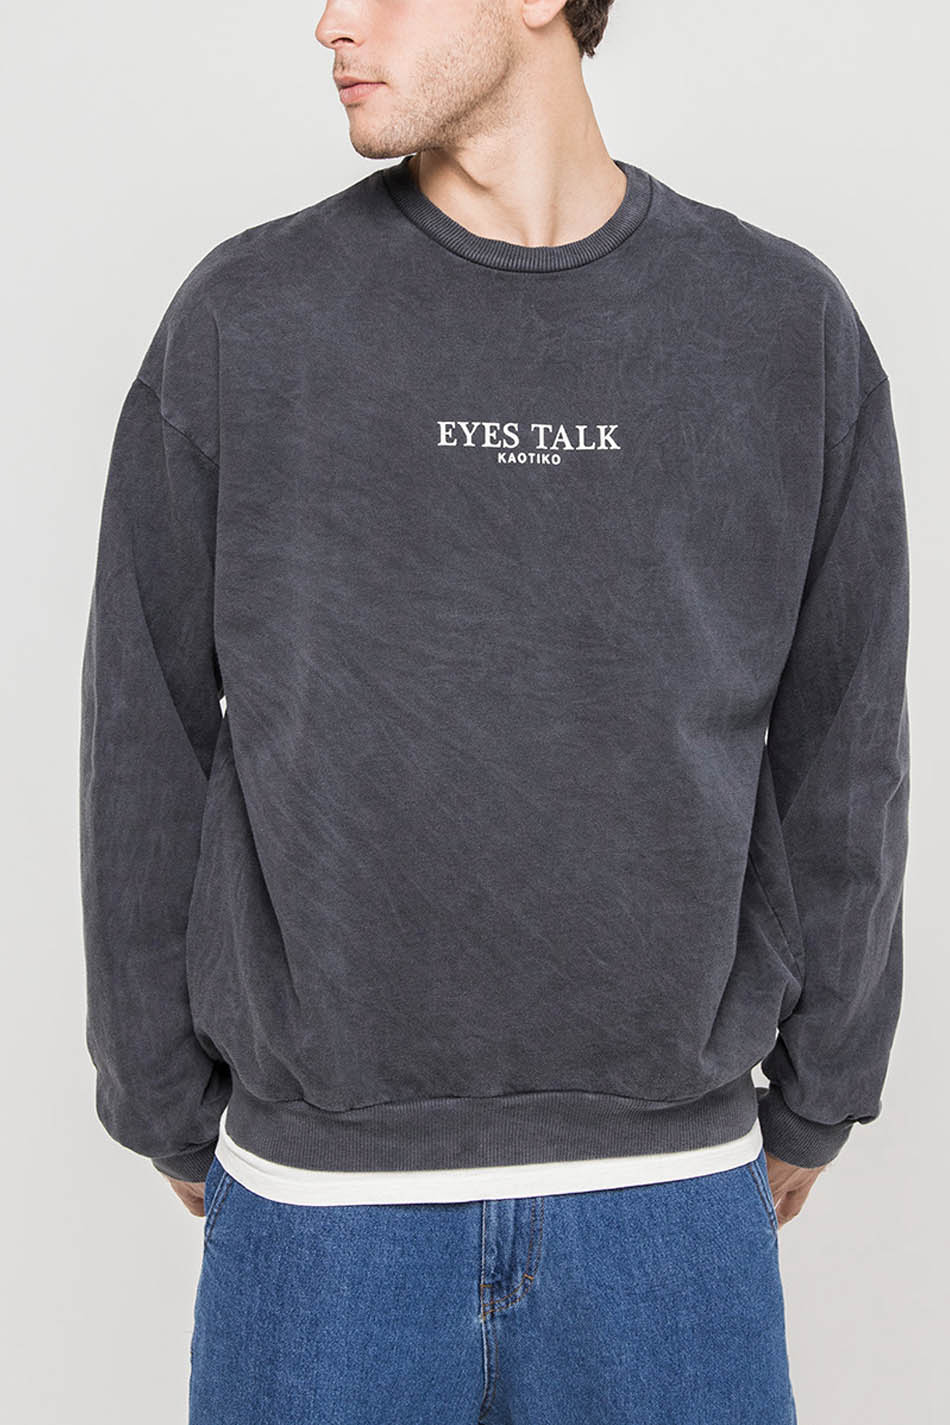 Eyes Talk Washed sweatshirt